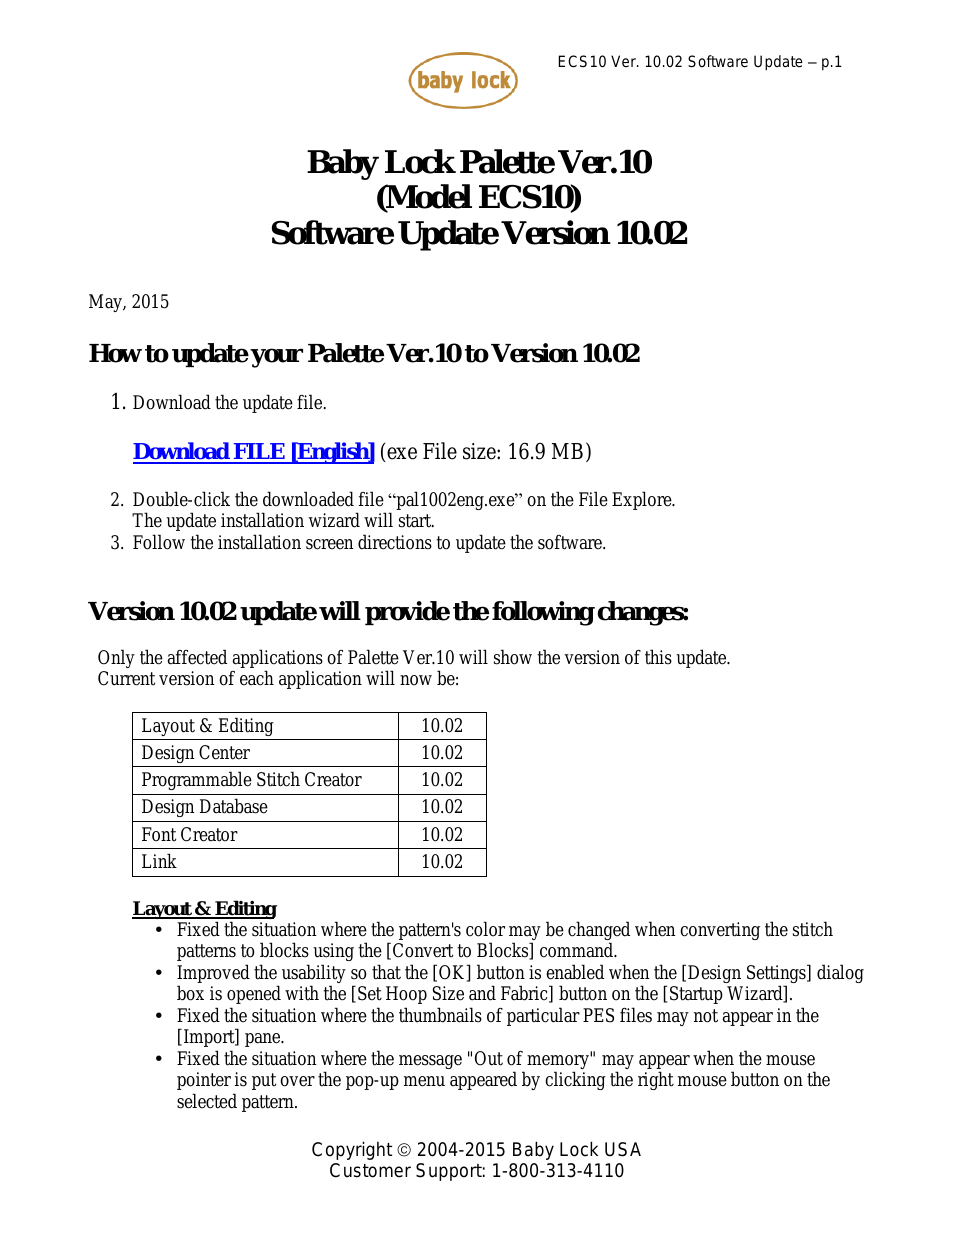 Palette 10 (ECS10) Software Update Version 10.02 Instructions